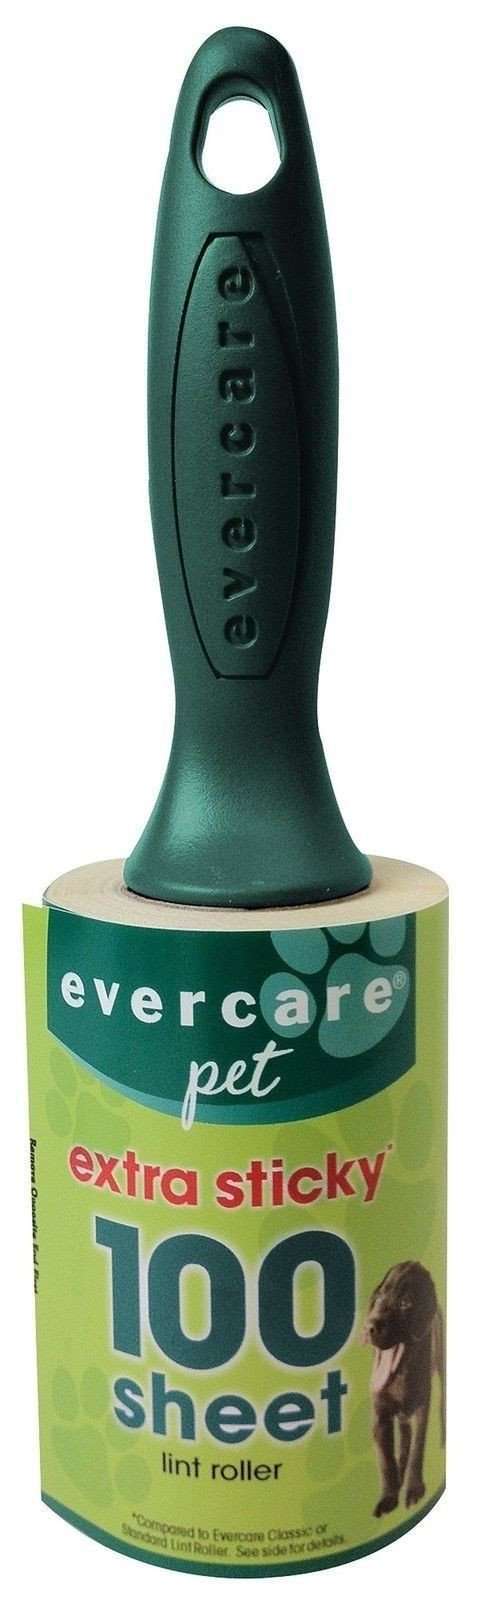 Evercare Pet Extreme Stick Plus 100 Sheet Lint Roller - $16.95